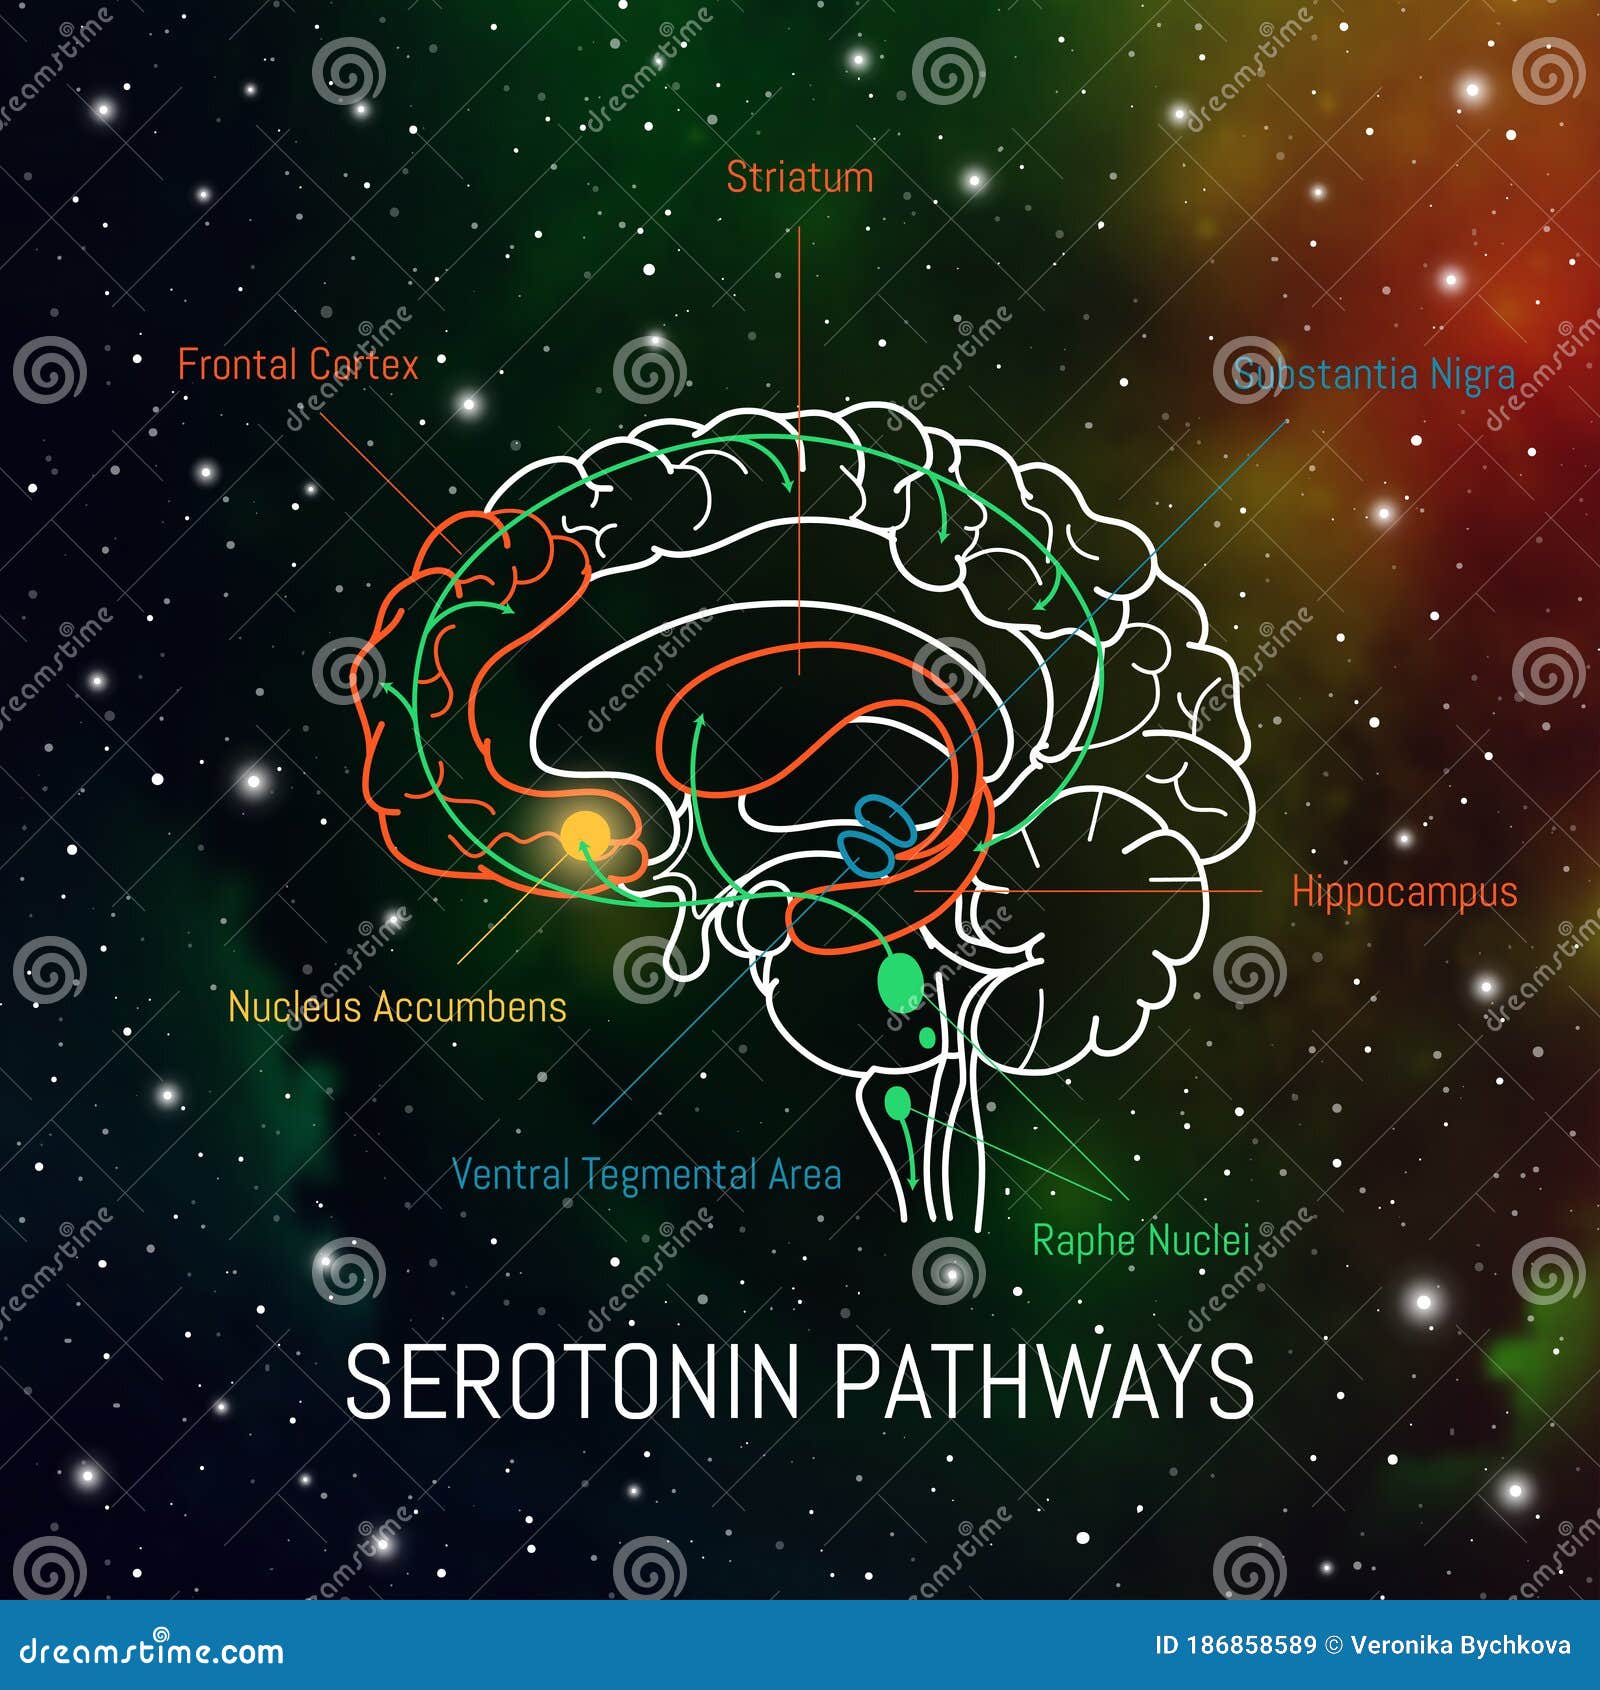 serotonin pathways in the brain. neuroscience medical infographic. striatum, substantia nigra, hippocampus, ventral tegmental area